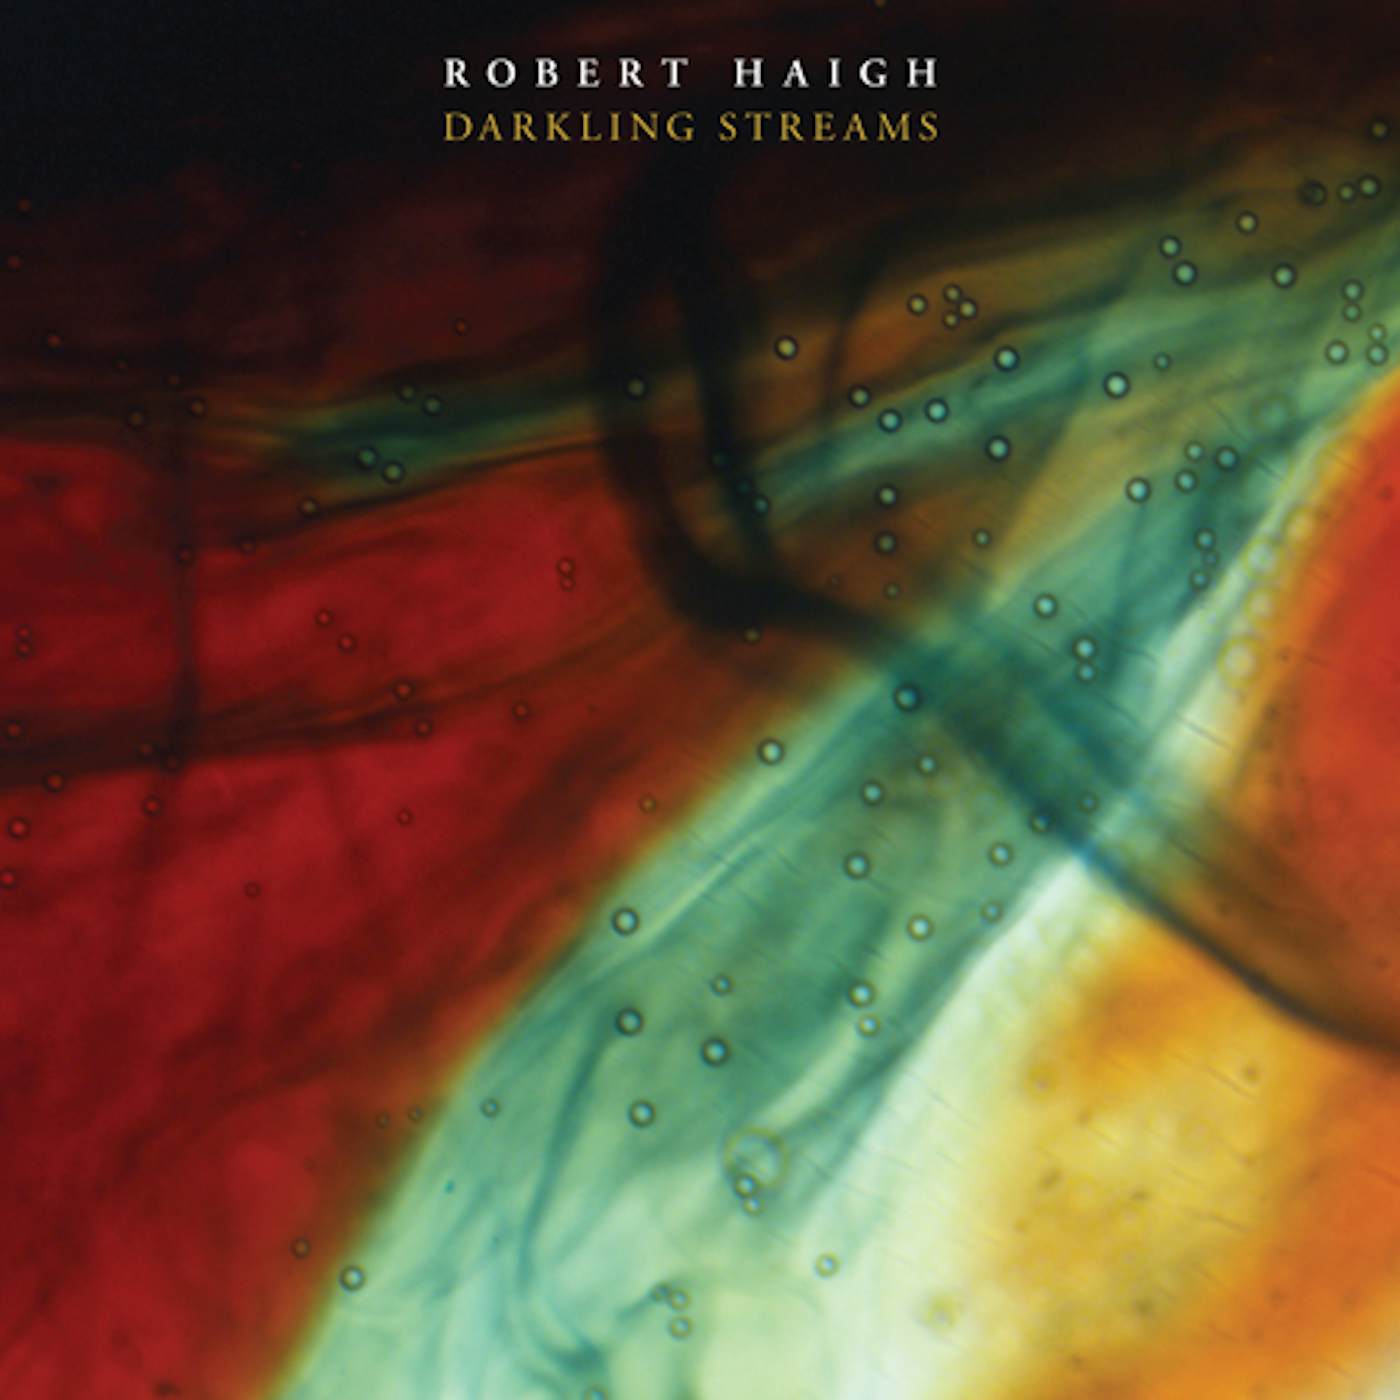 Robert Haigh DARKLING STREAMS CD